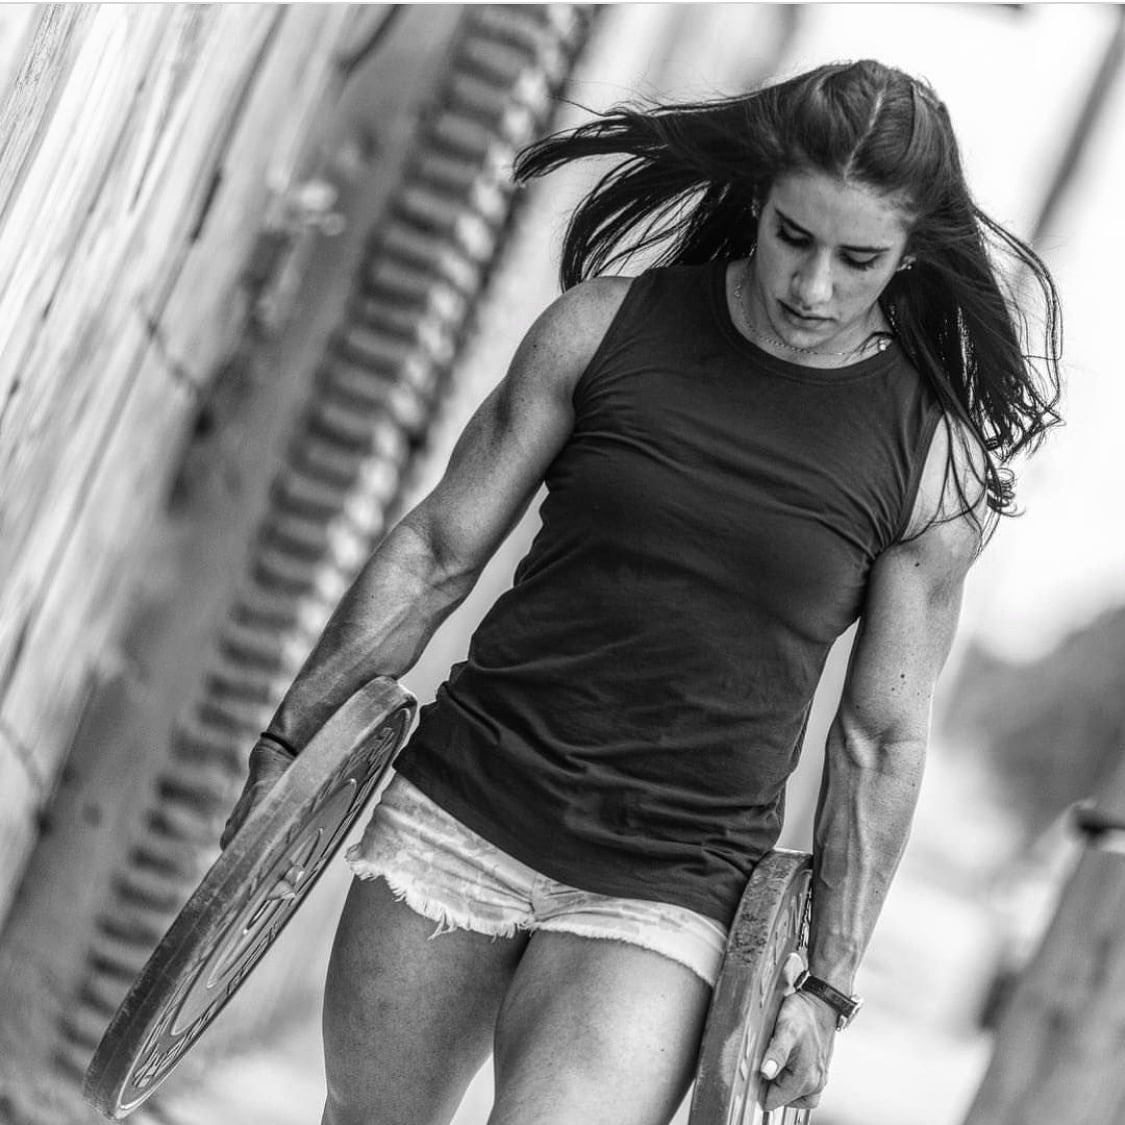 Stefanie Cohen  Fitness models, Back and biceps, Female athletes